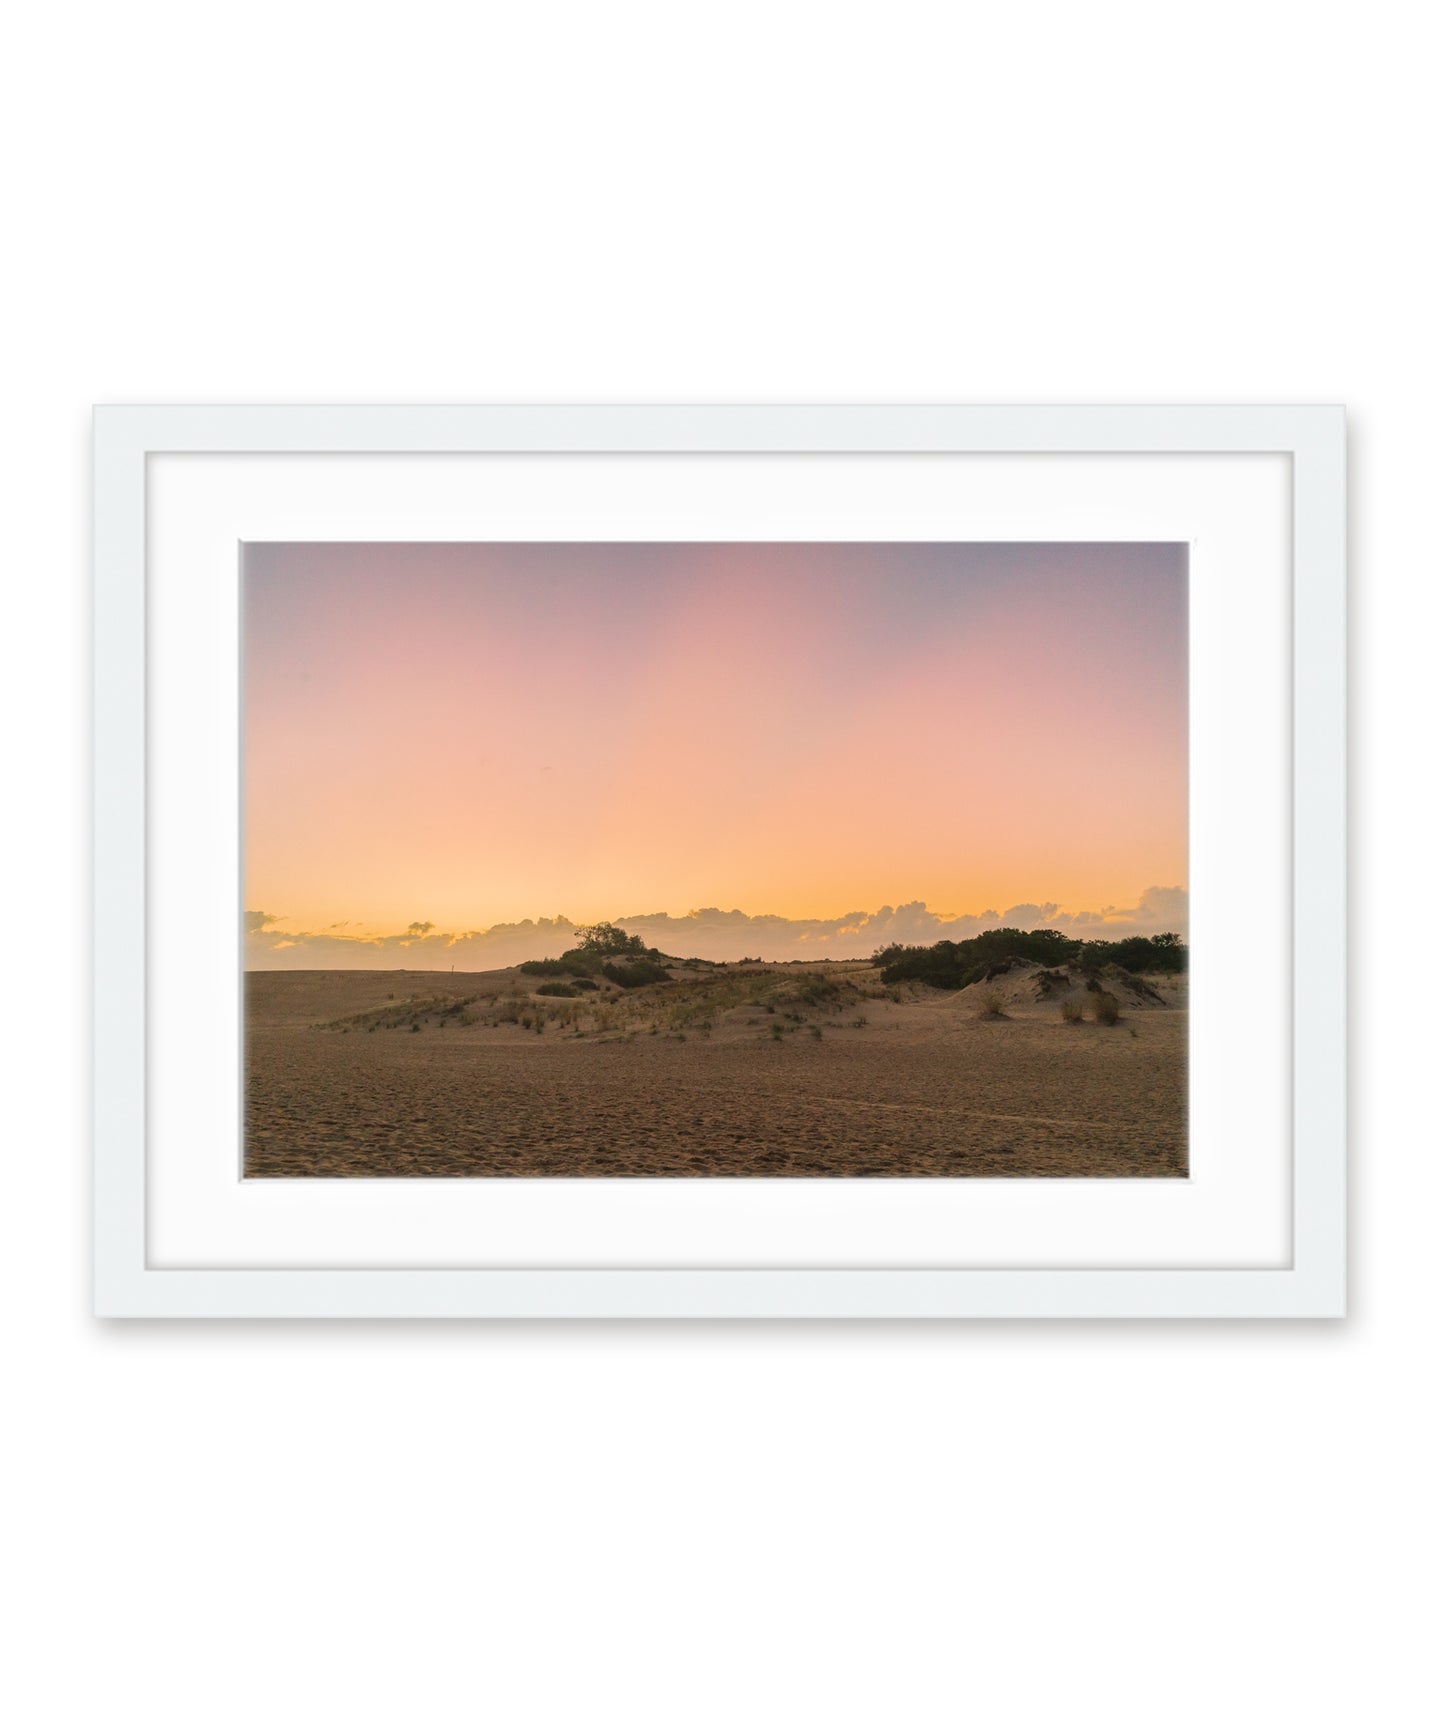 outer banks, jockeys ridge sunset dunes photograph by wright and roam, white frame